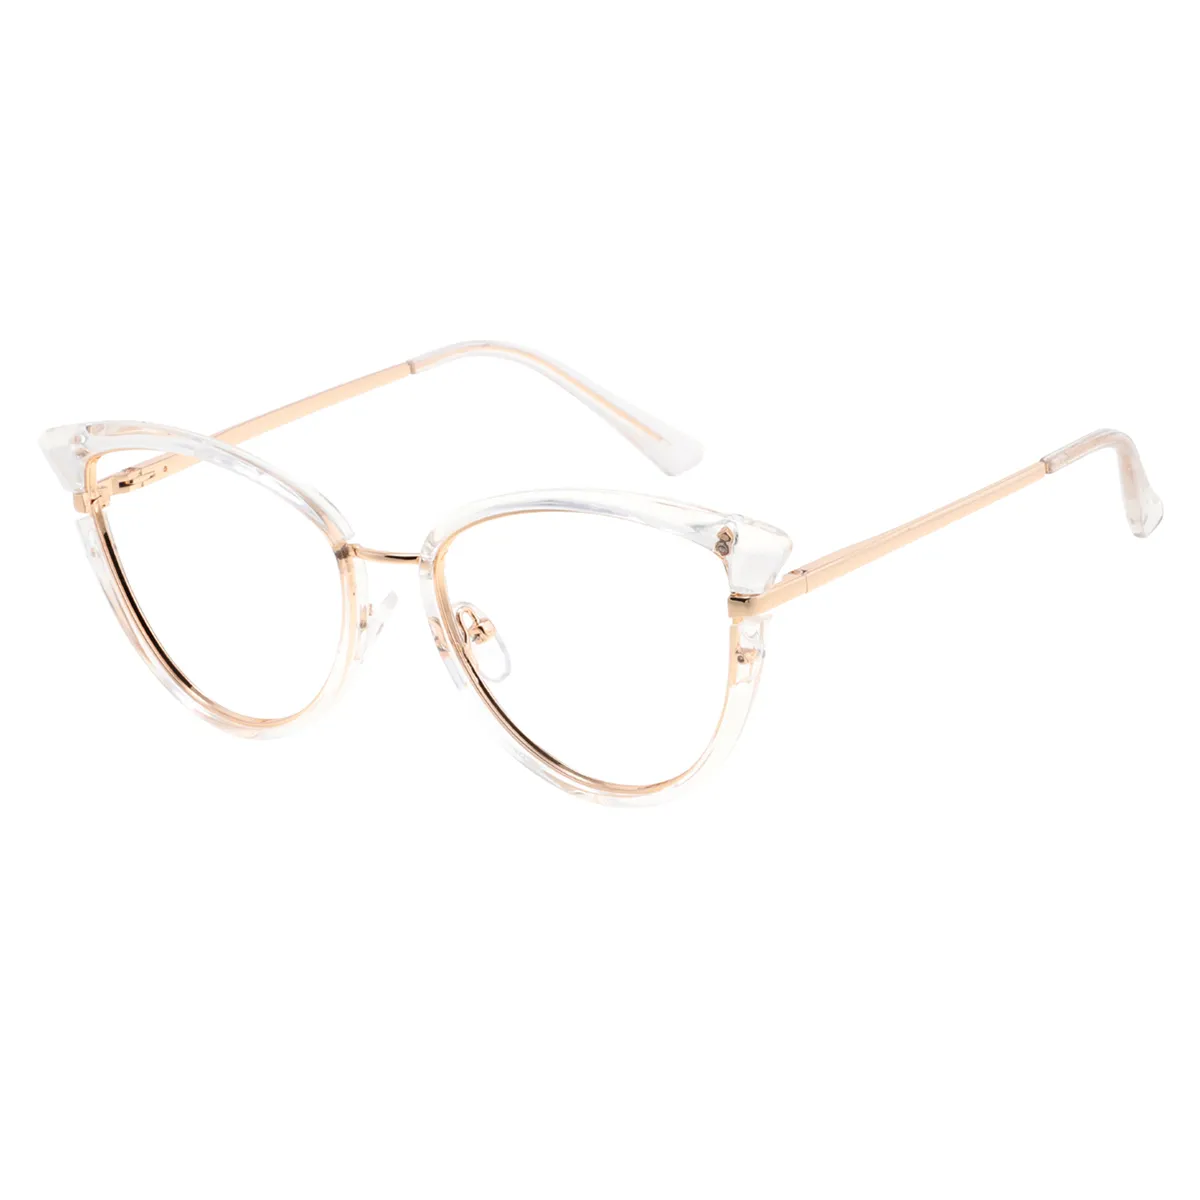 Griffin - Cat-eye Translucent Glasses for Women